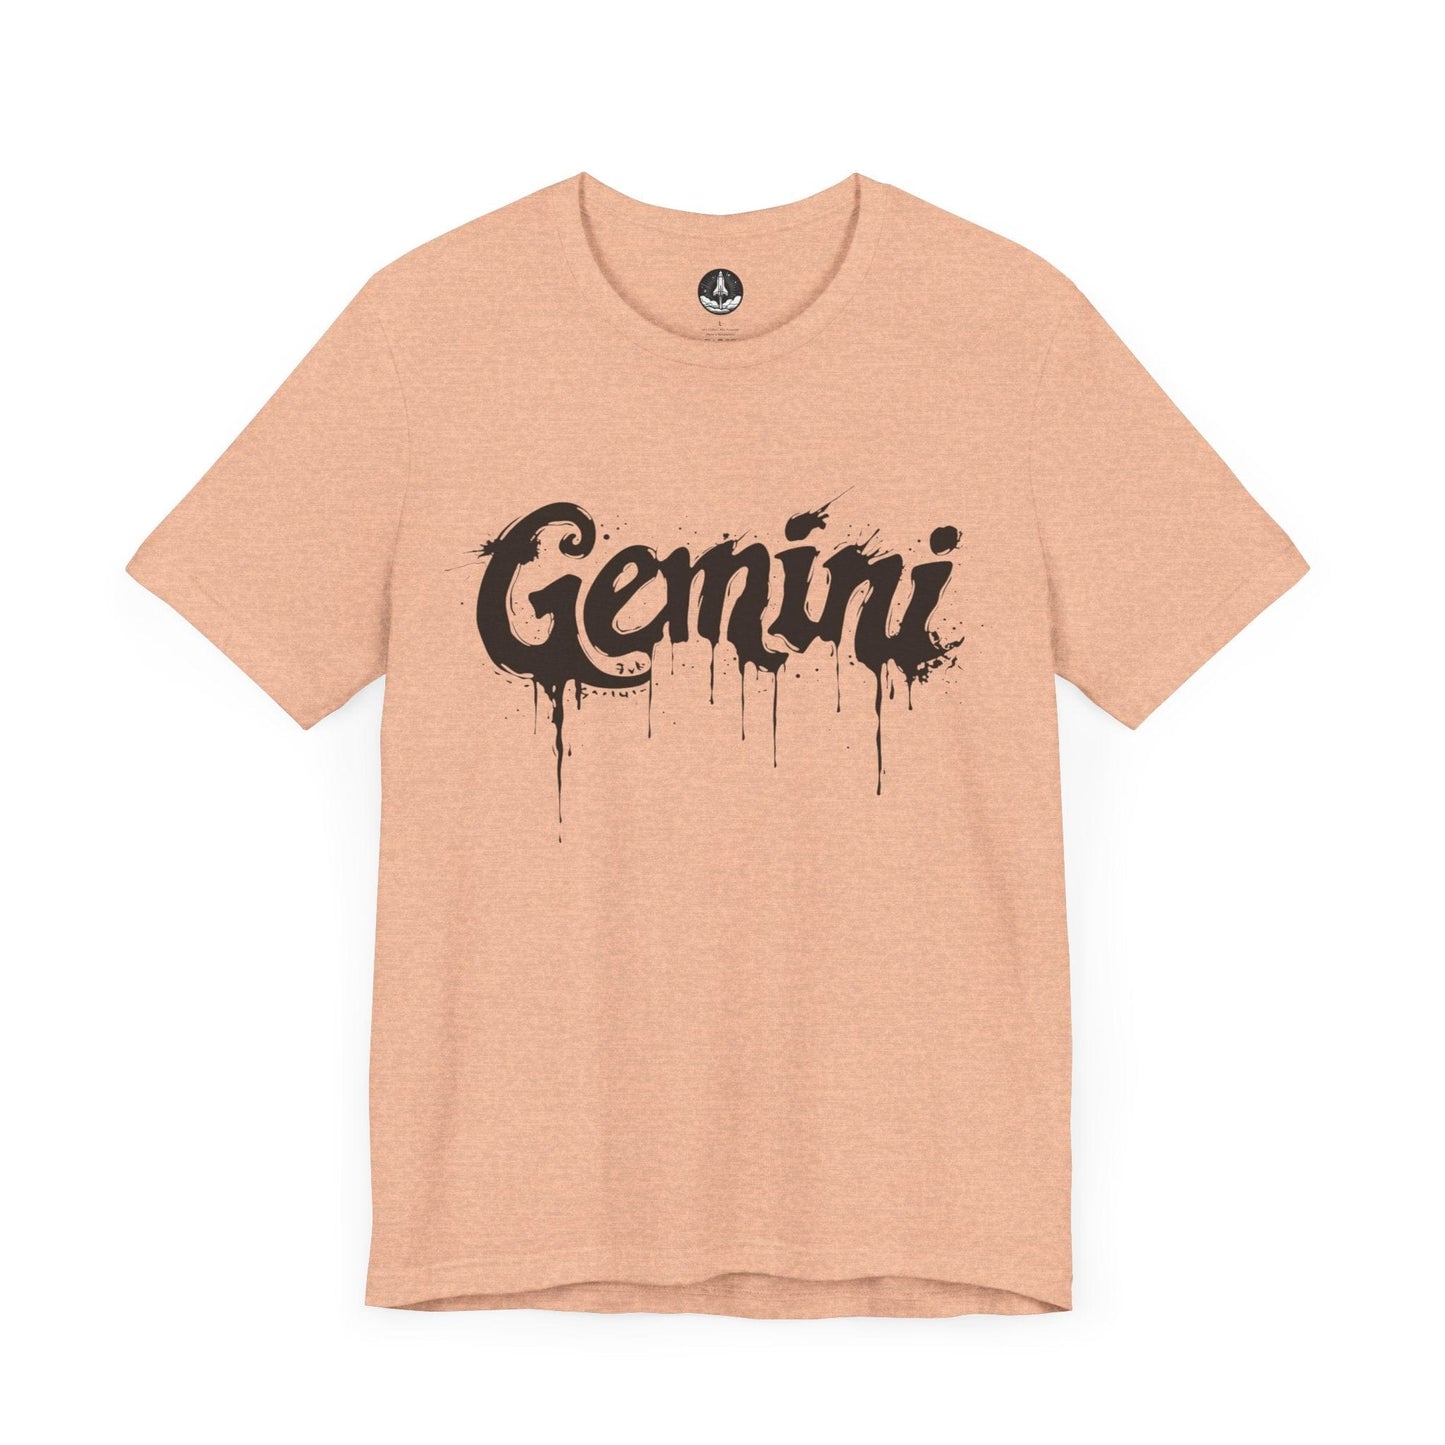 T-Shirt Heather Peach / S Gemini Ink Drop TShirt